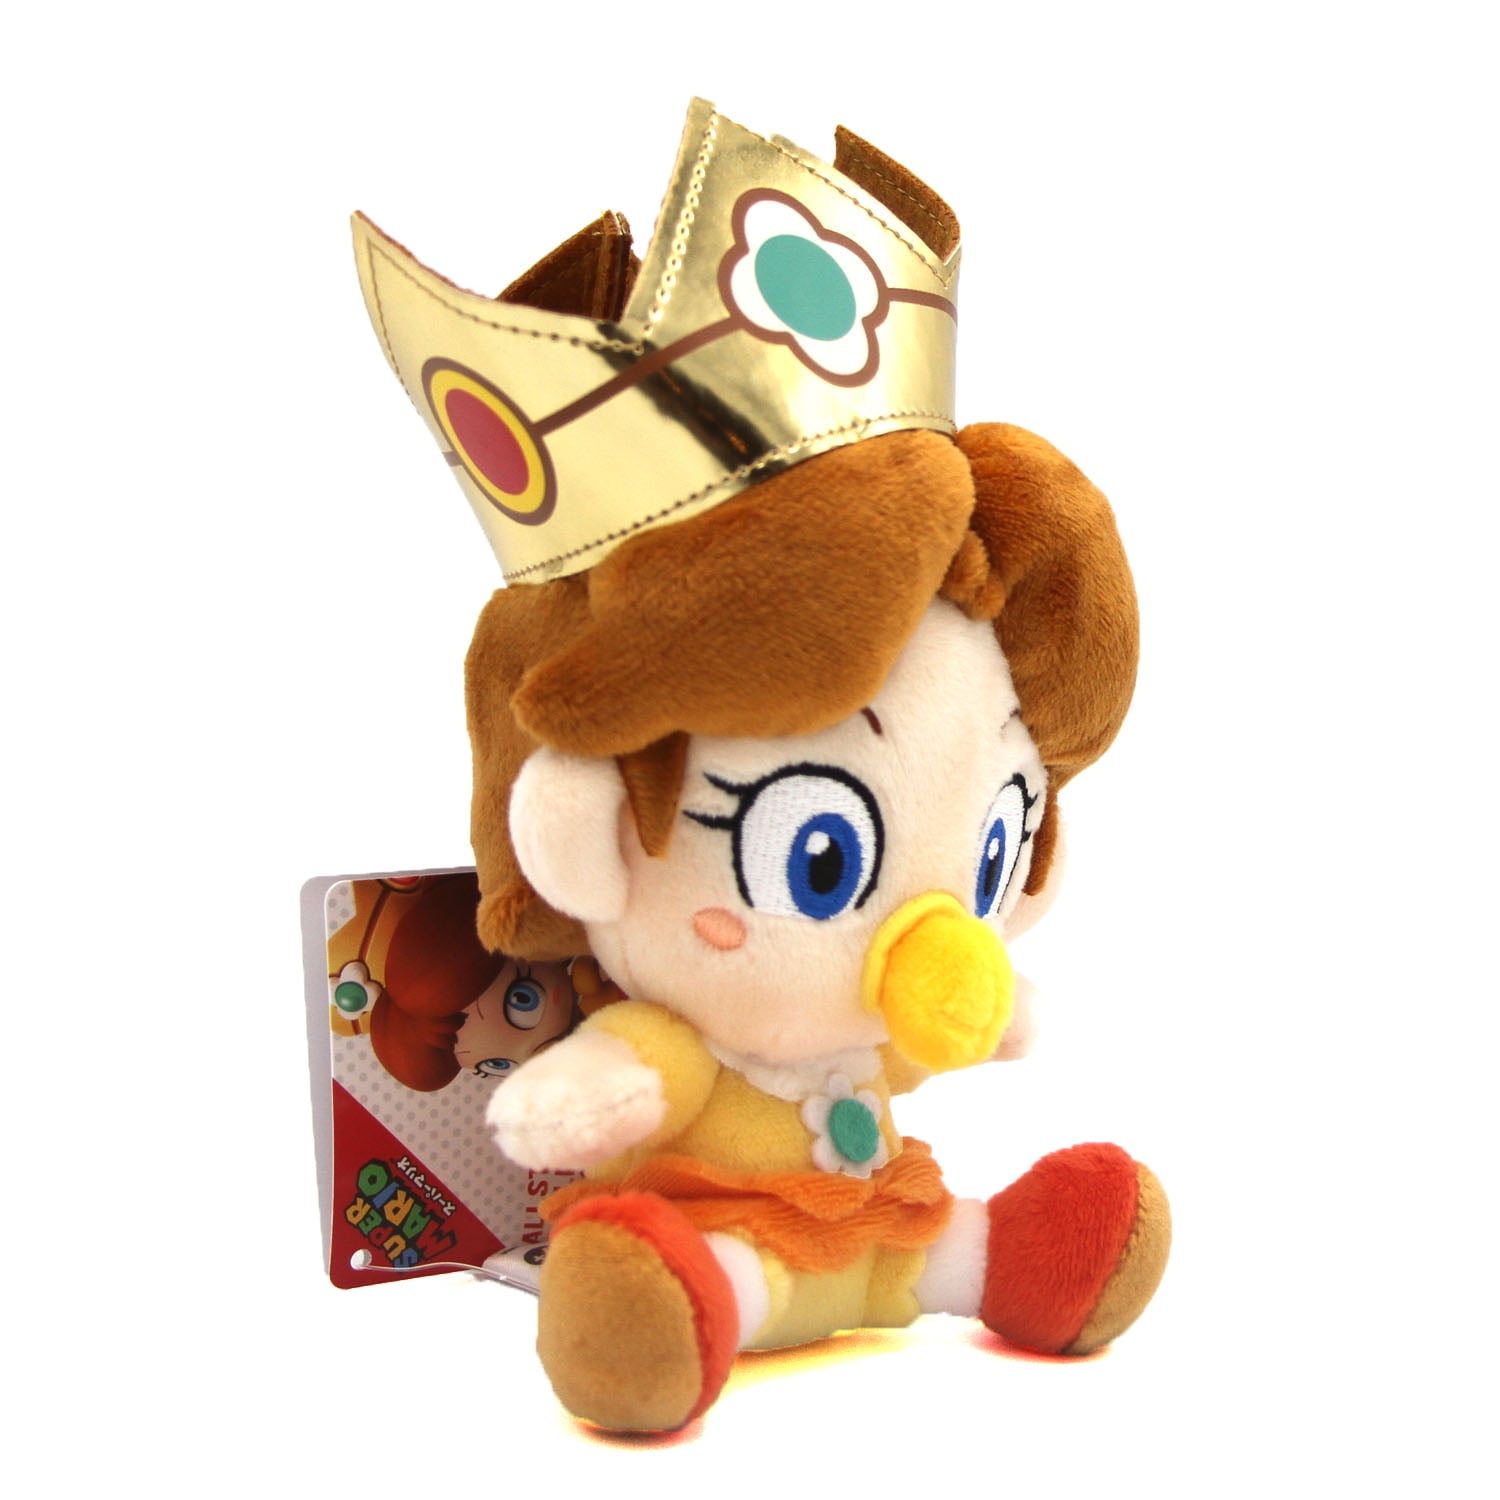 Princess Daisy Plush  Super Mario • Magic Plush